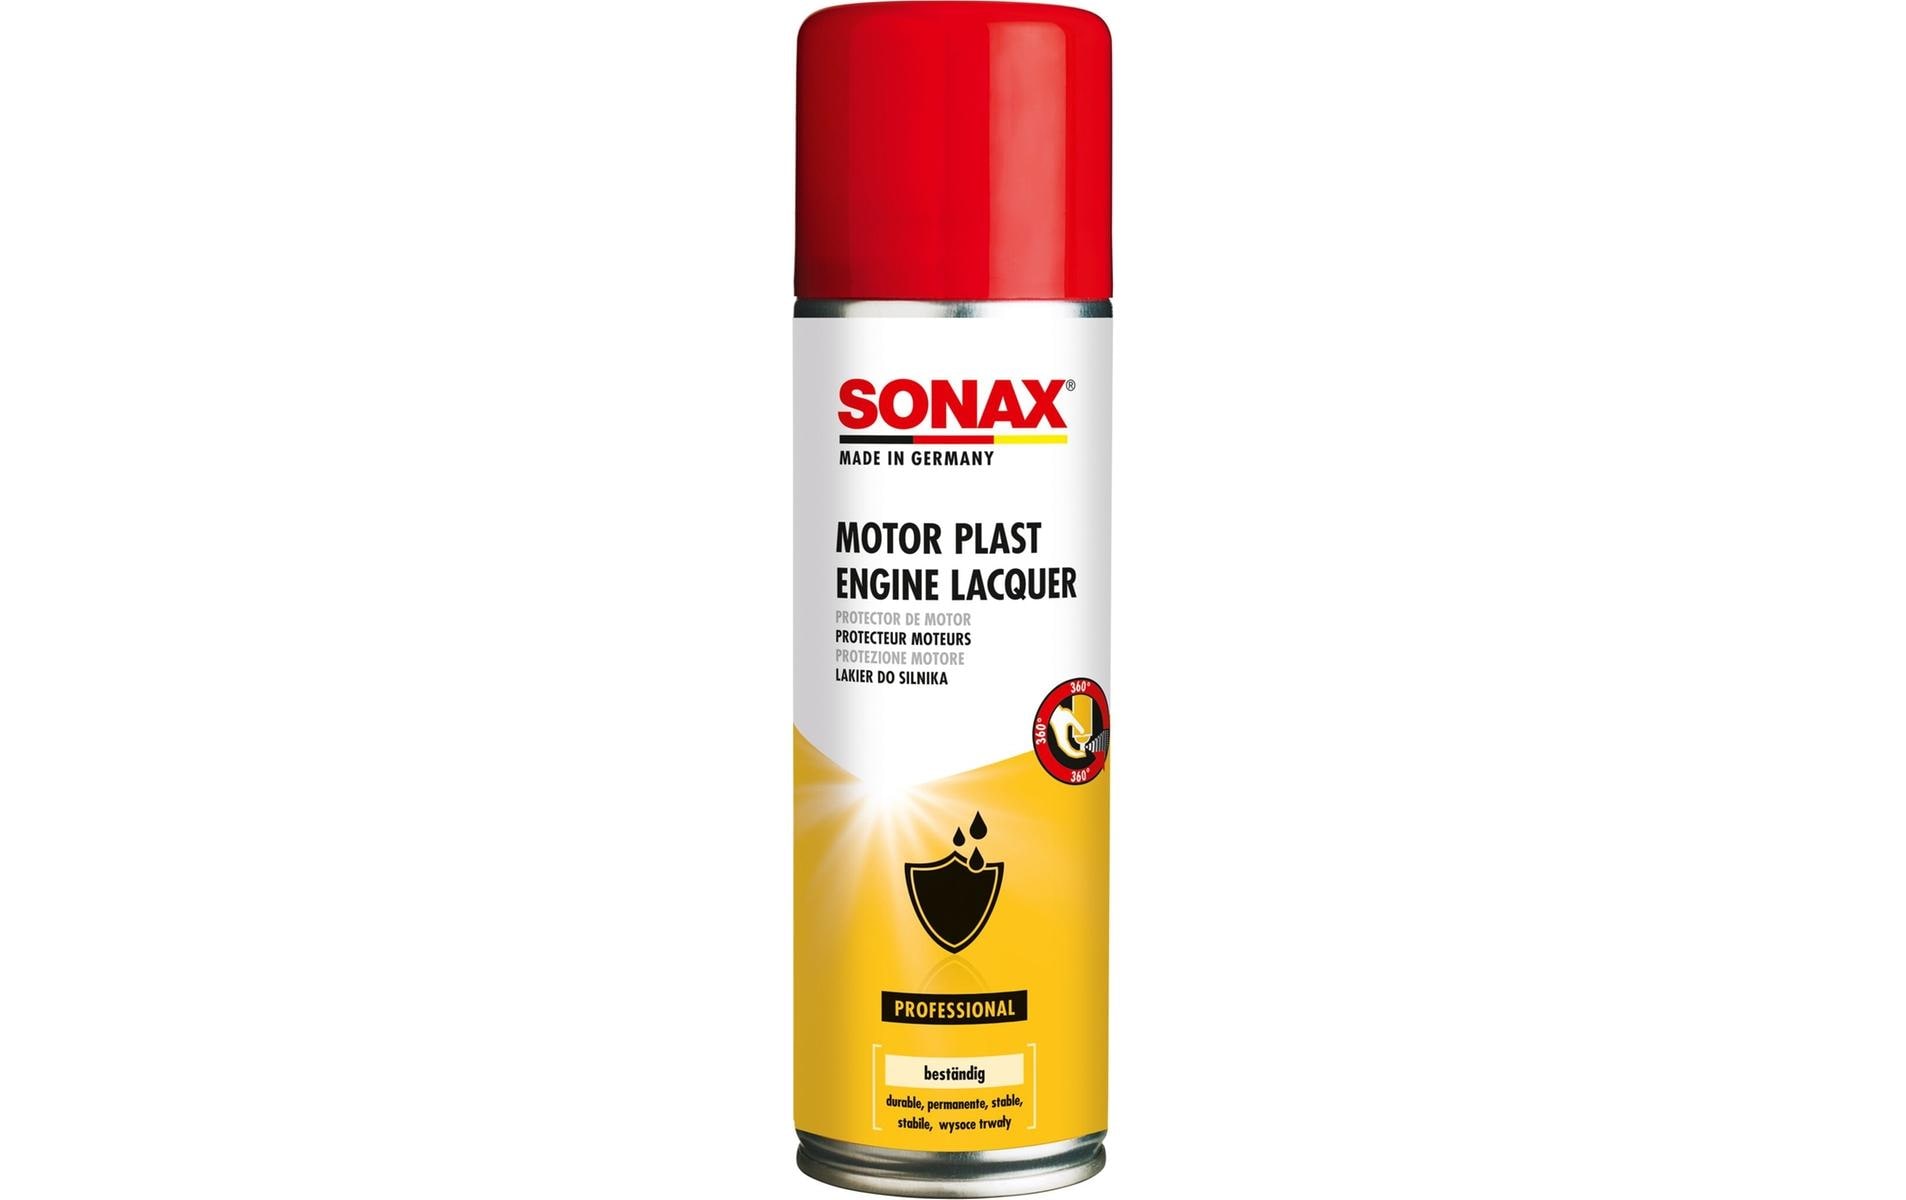 Sonax PROFESSIONAL Motor Plast